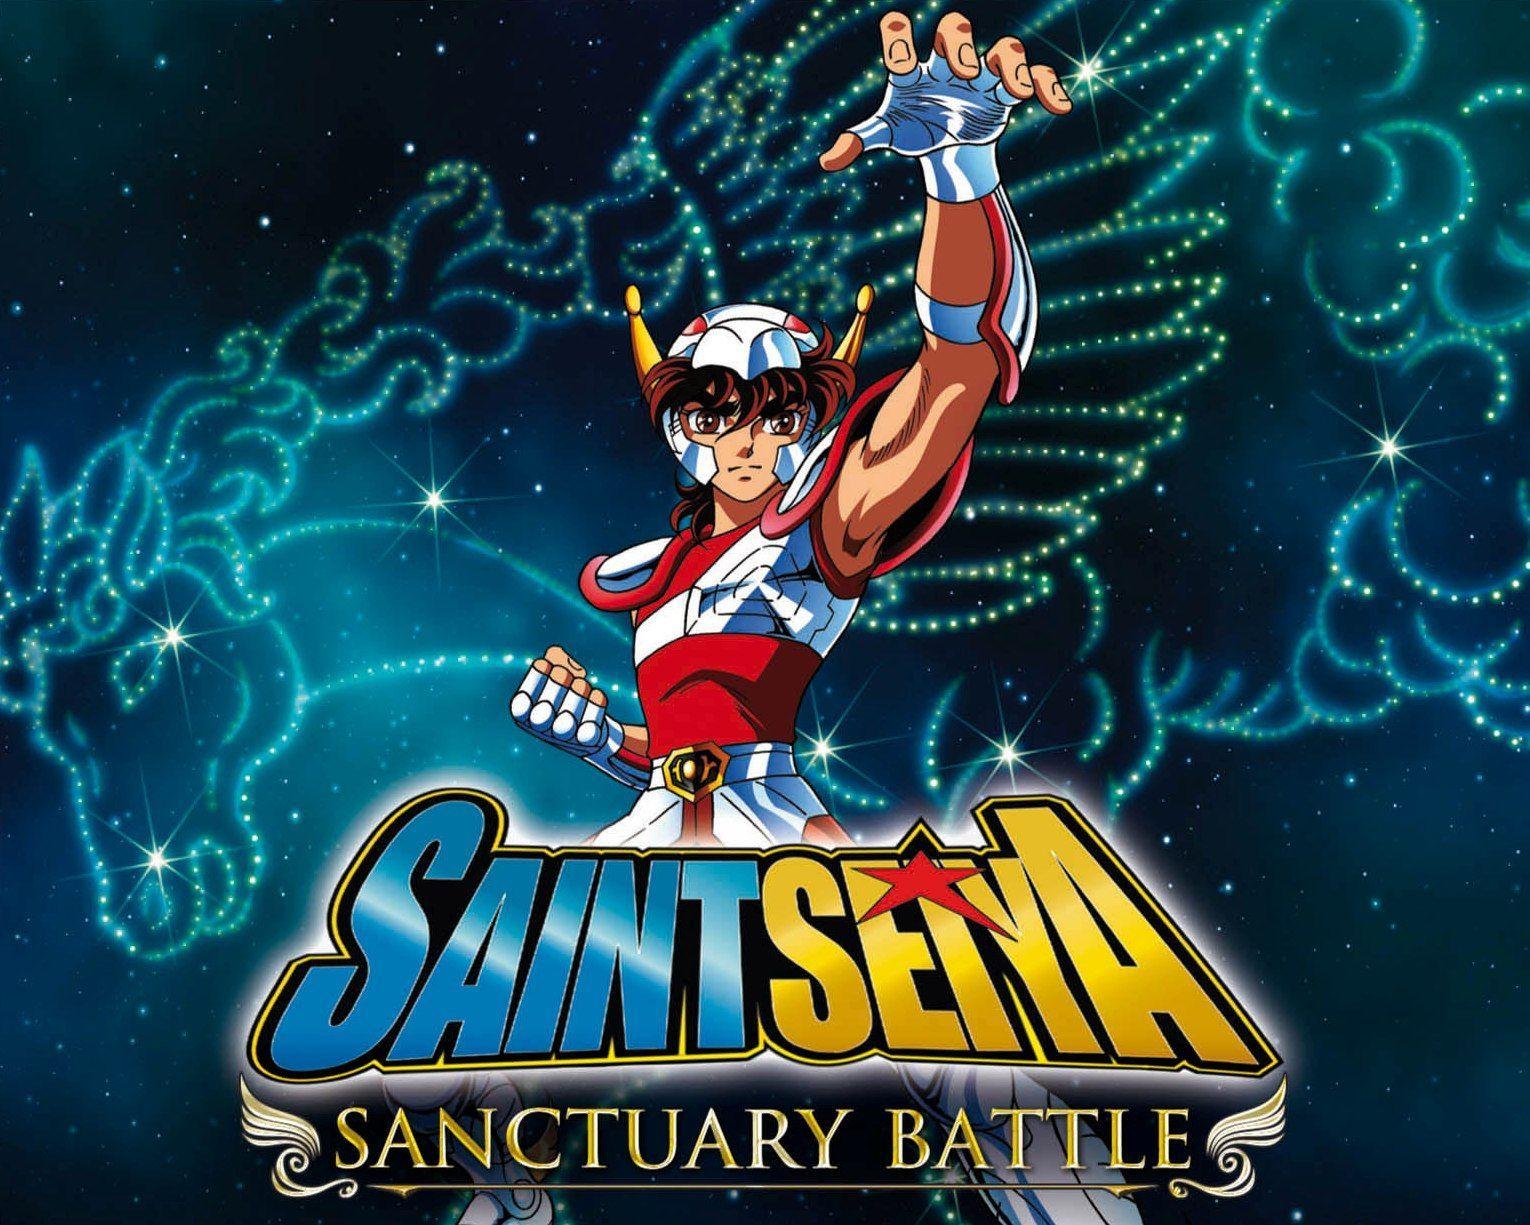 Saint Seiya WallpaperUSkY.com